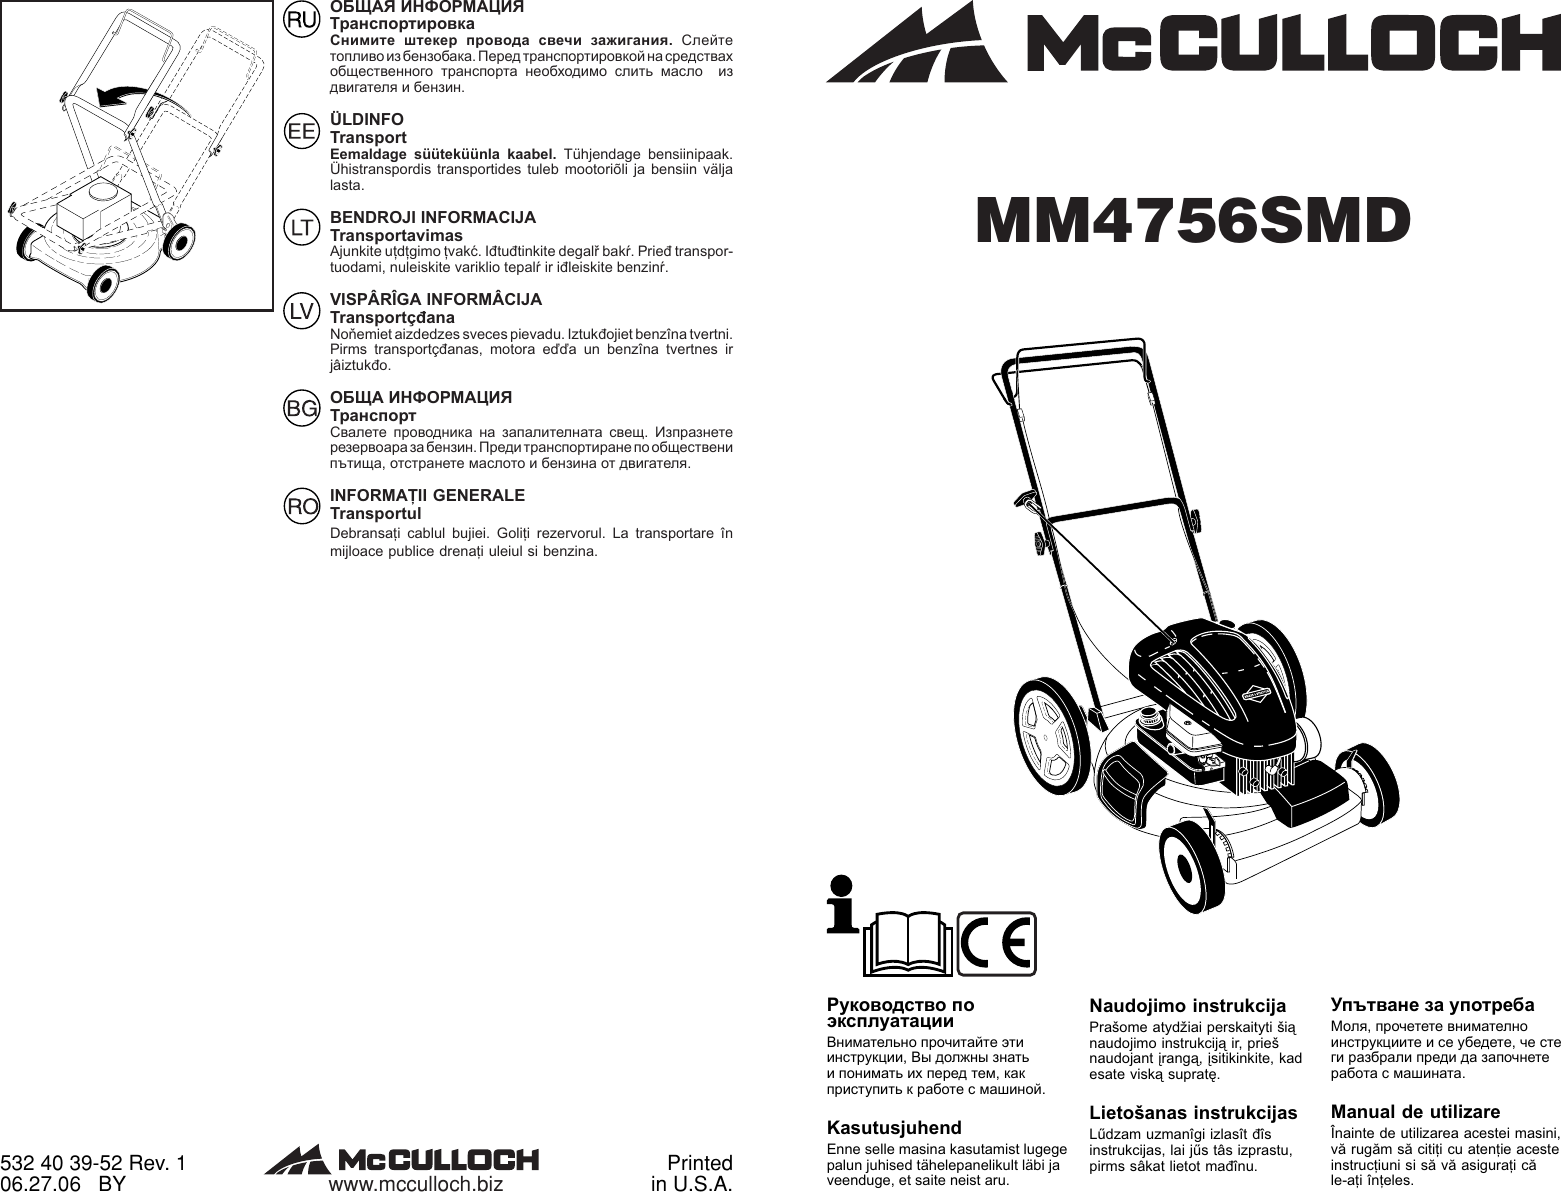 Mcculloch Mm4756smd Users Manual Om Mcculloch Mm4756 Smd 07 02 Lawn Mower Ru Ee Lt Lv Bg Ro